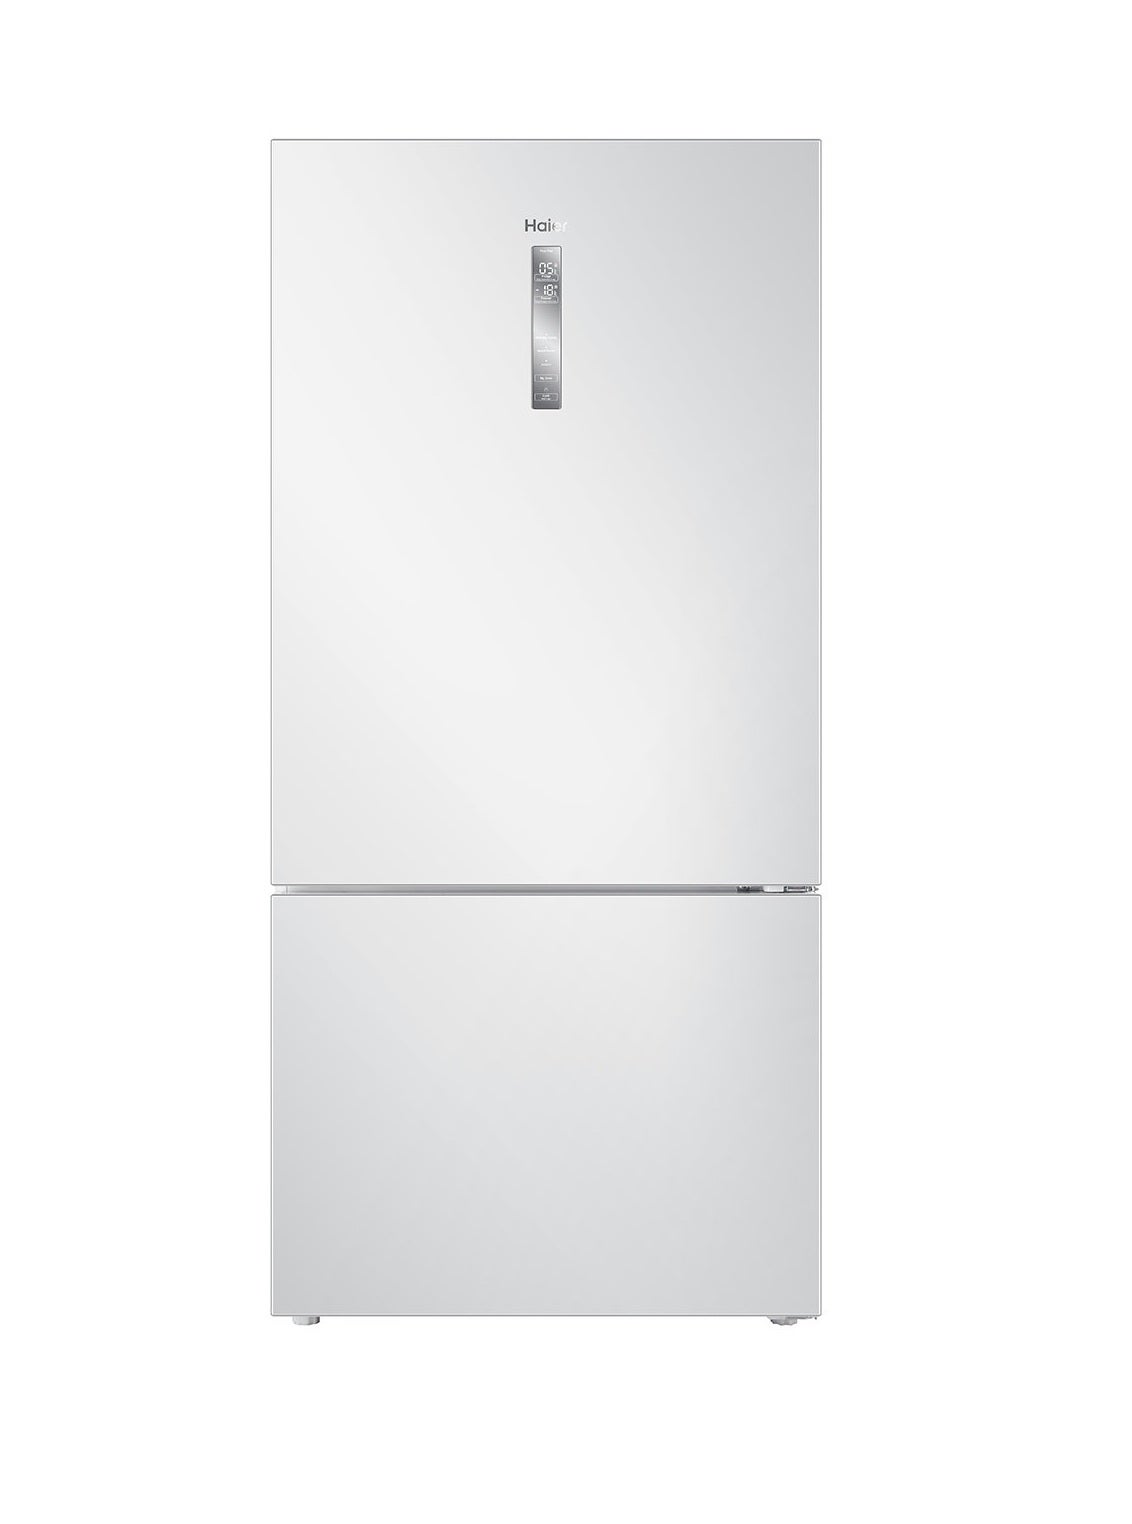 Haier HRF520BW Refrigerator